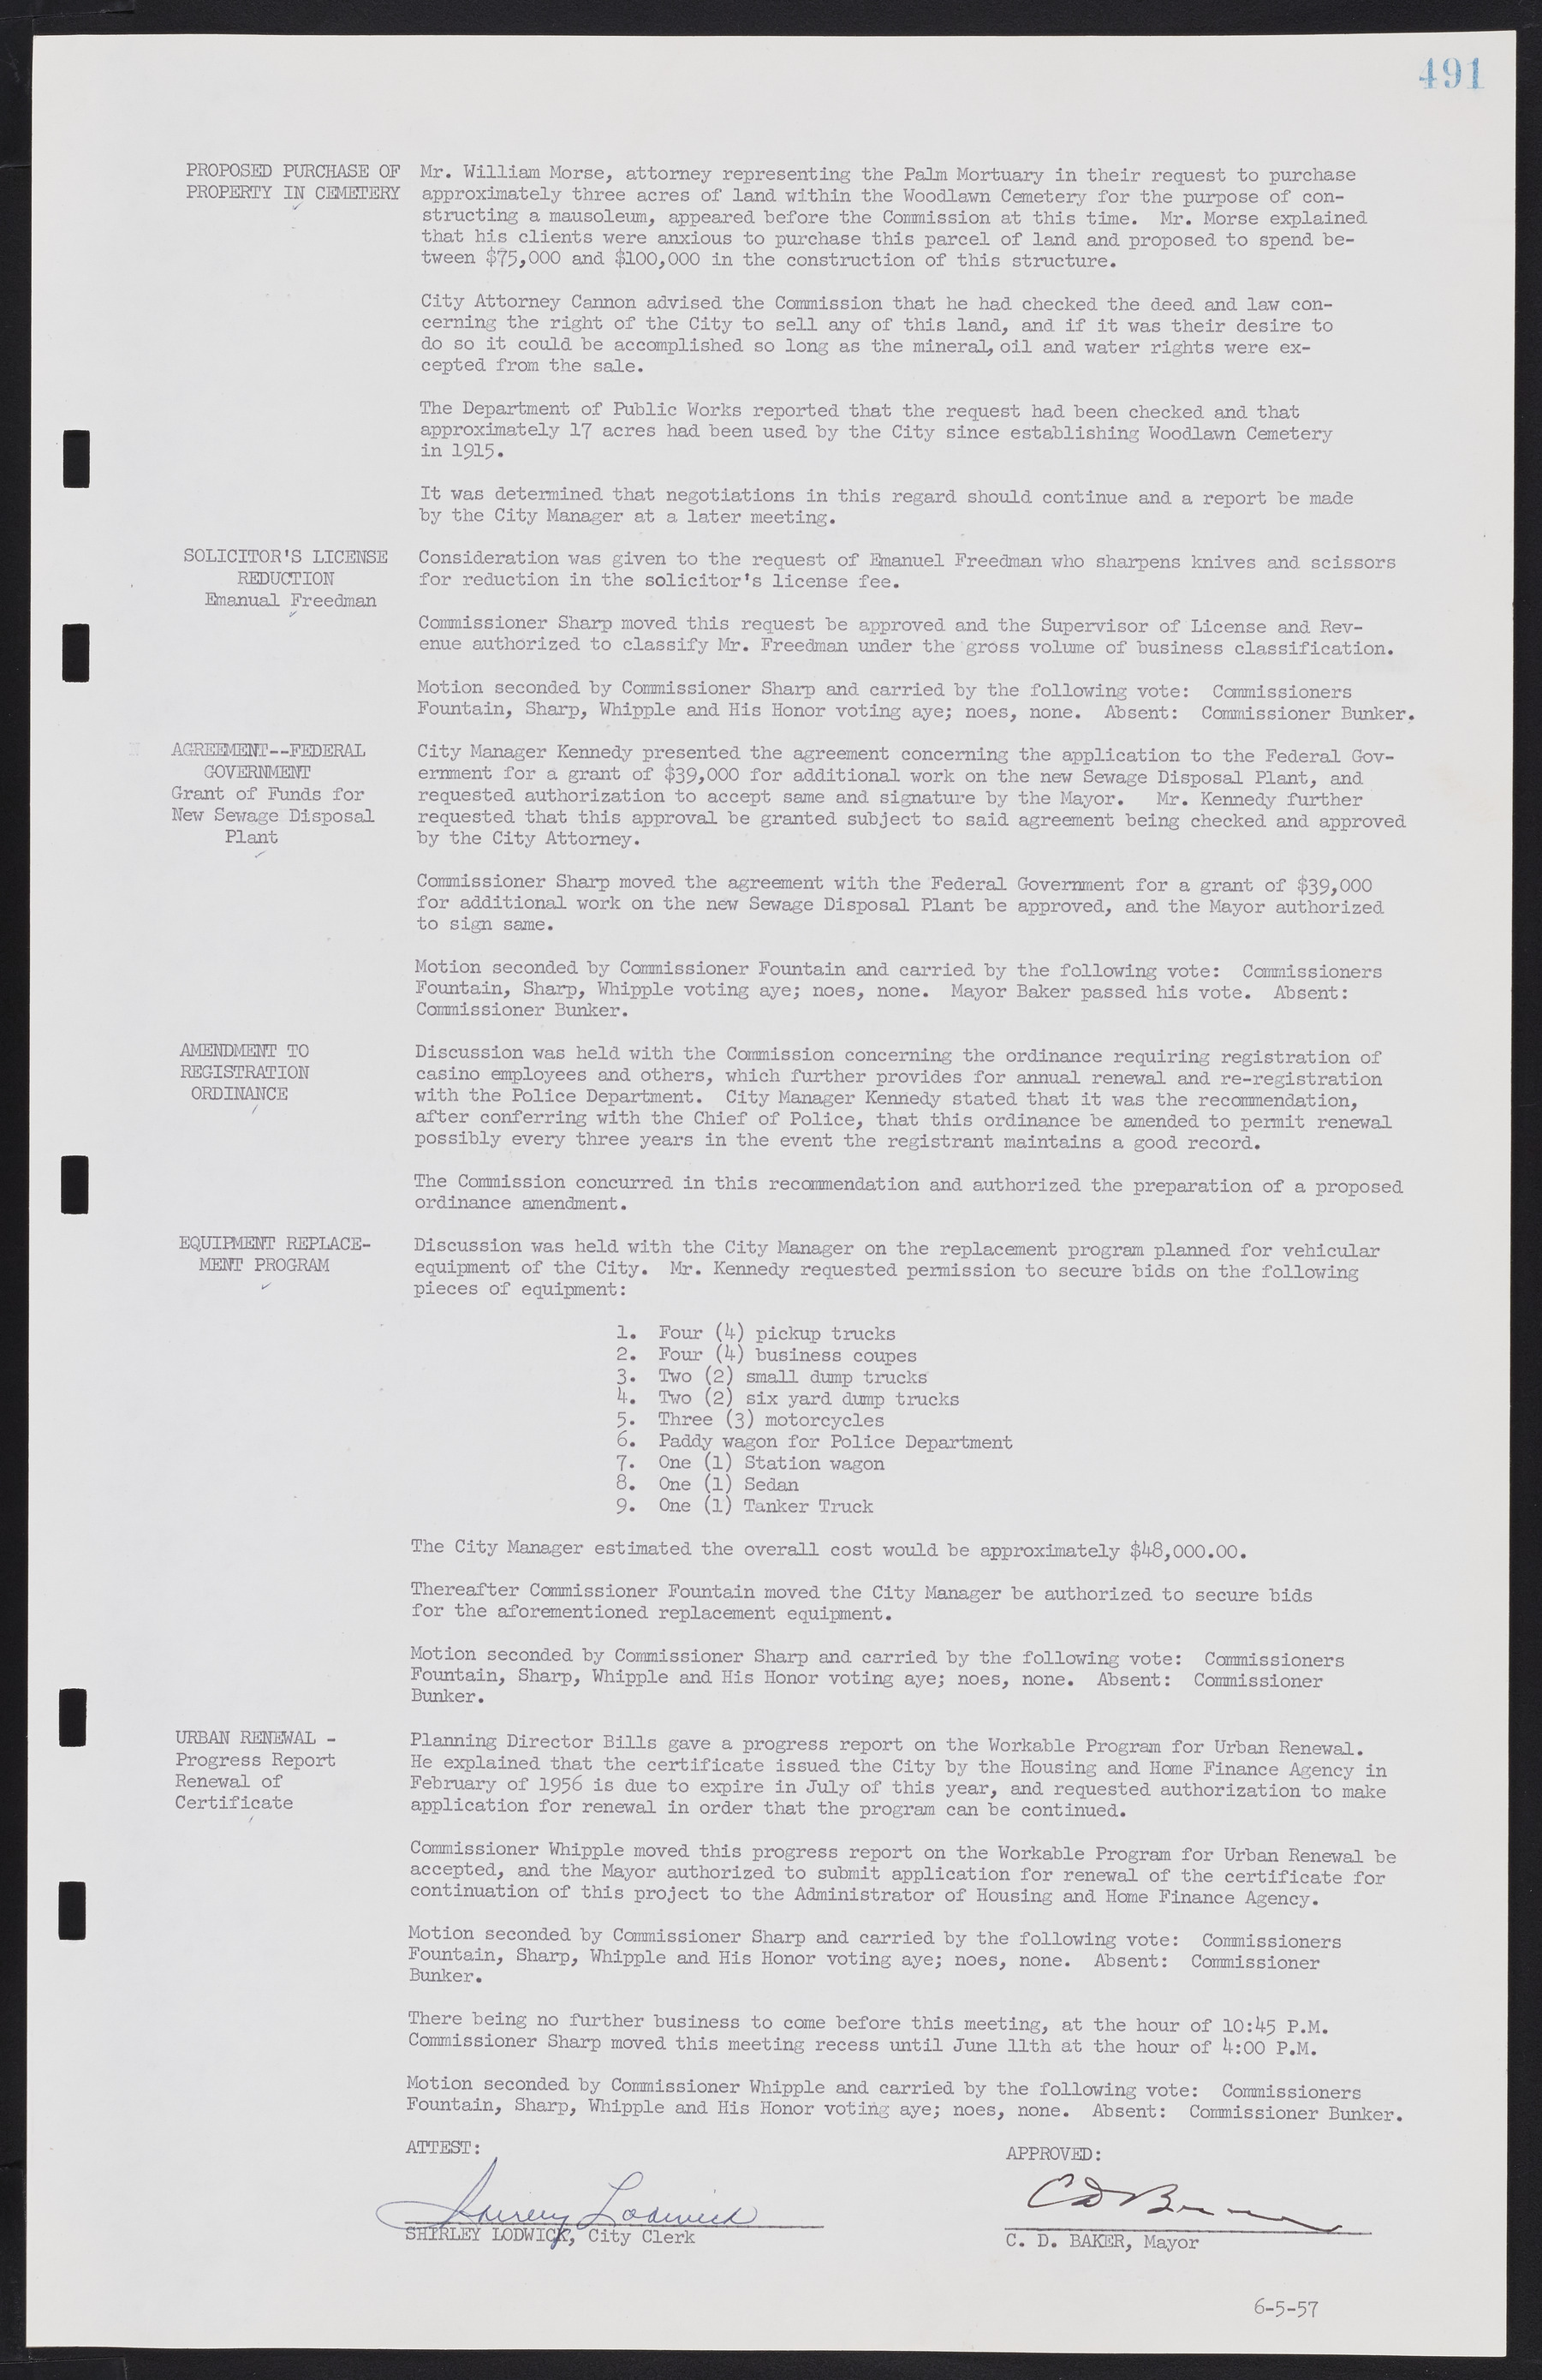 Las Vegas City Commission Minutes, September 21, 1955 to November 20, 1957, lvc000010-511